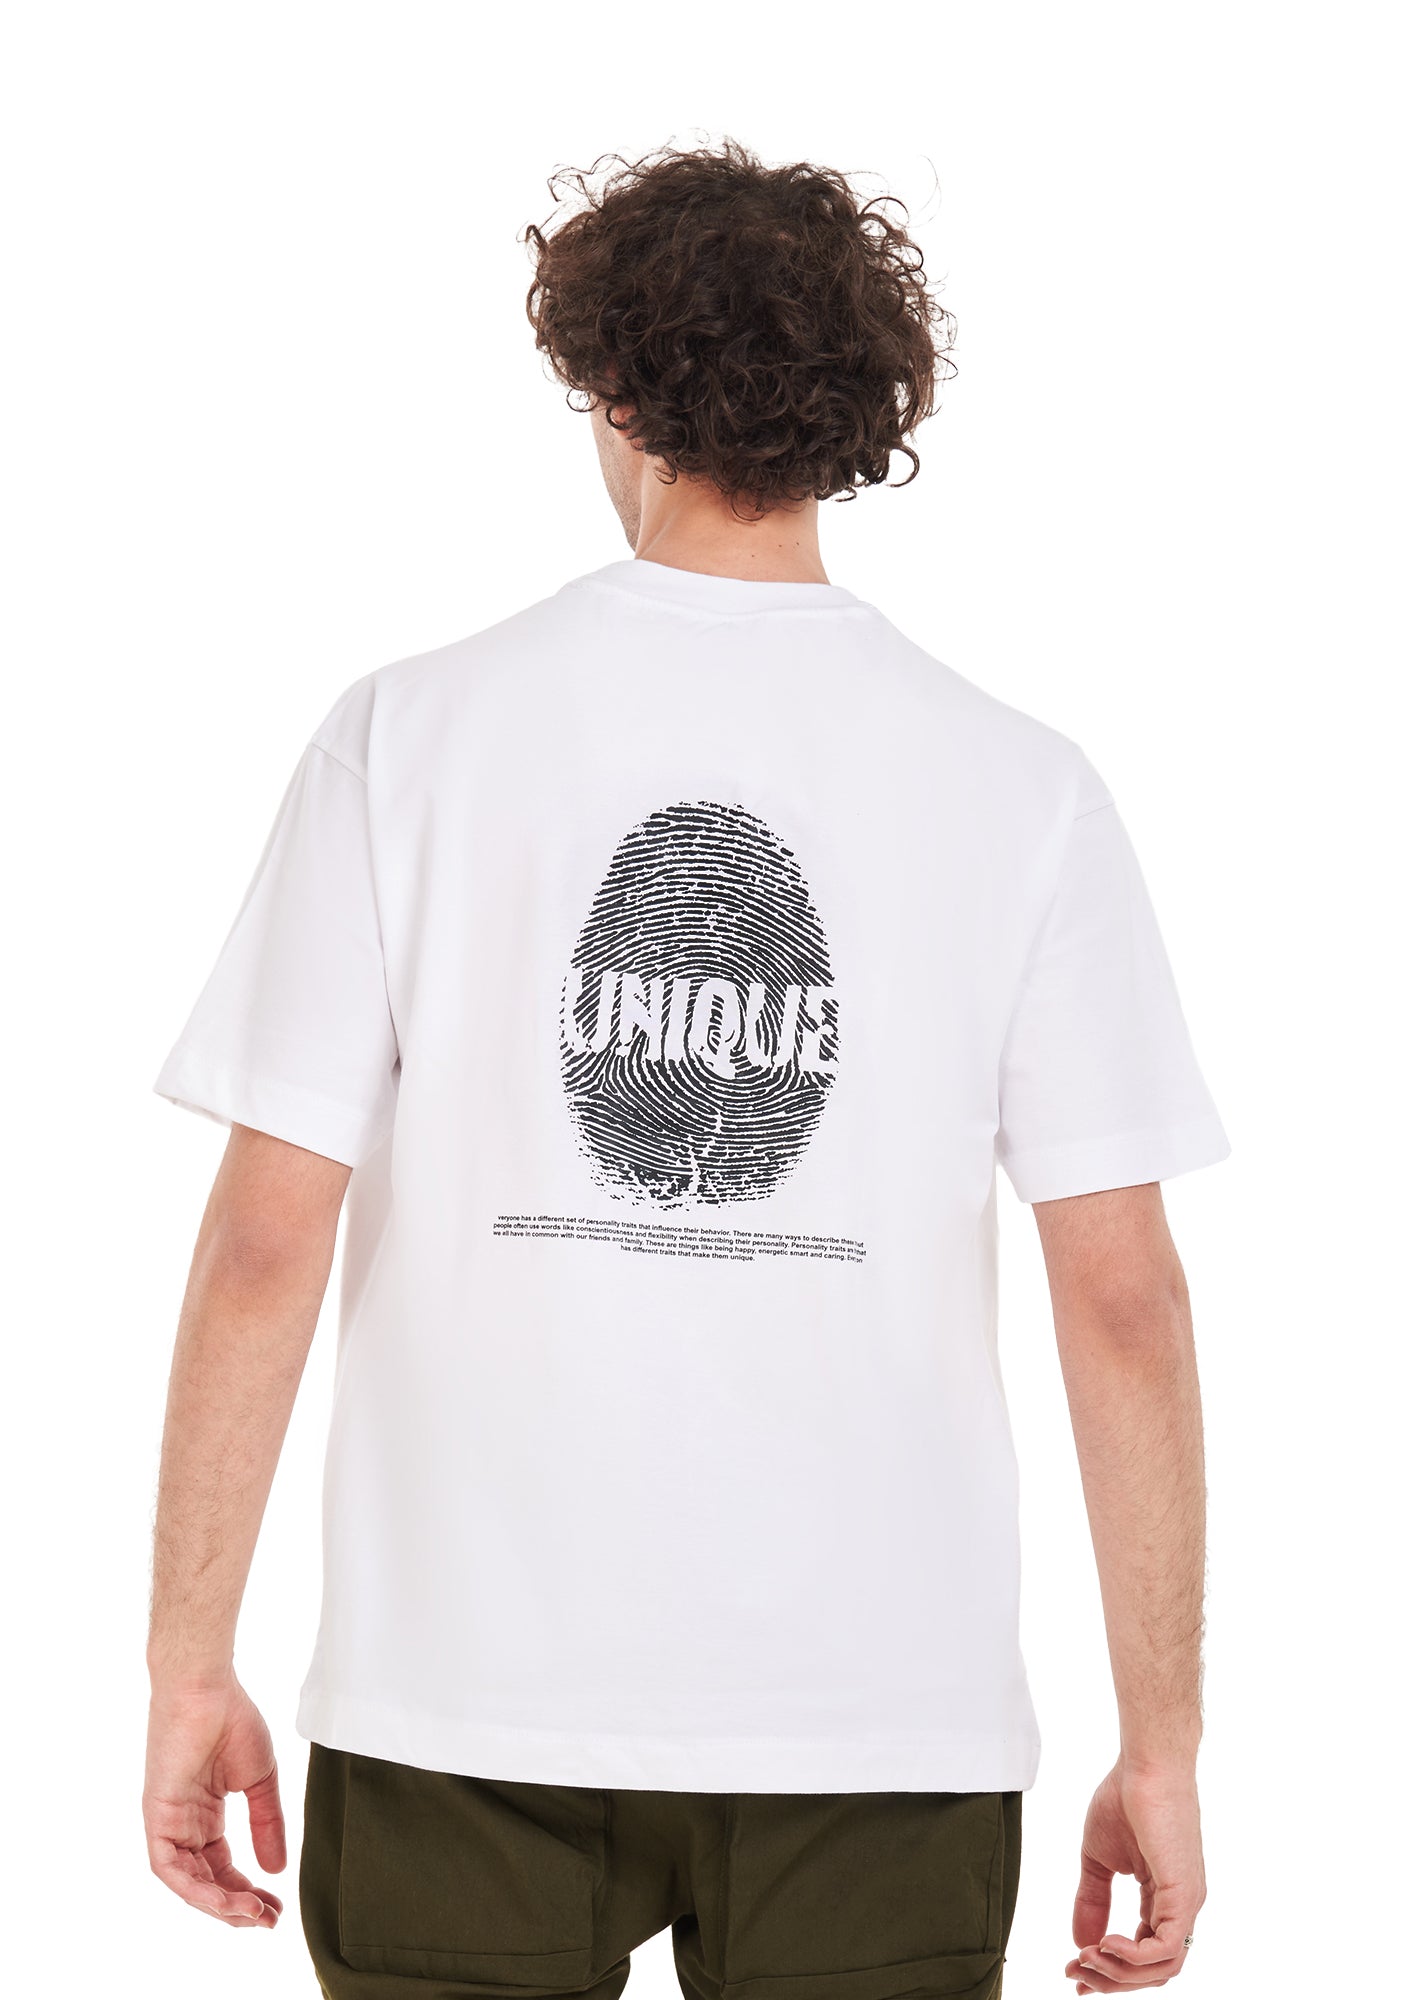 Uniqe Oversized printed White T-shirt .